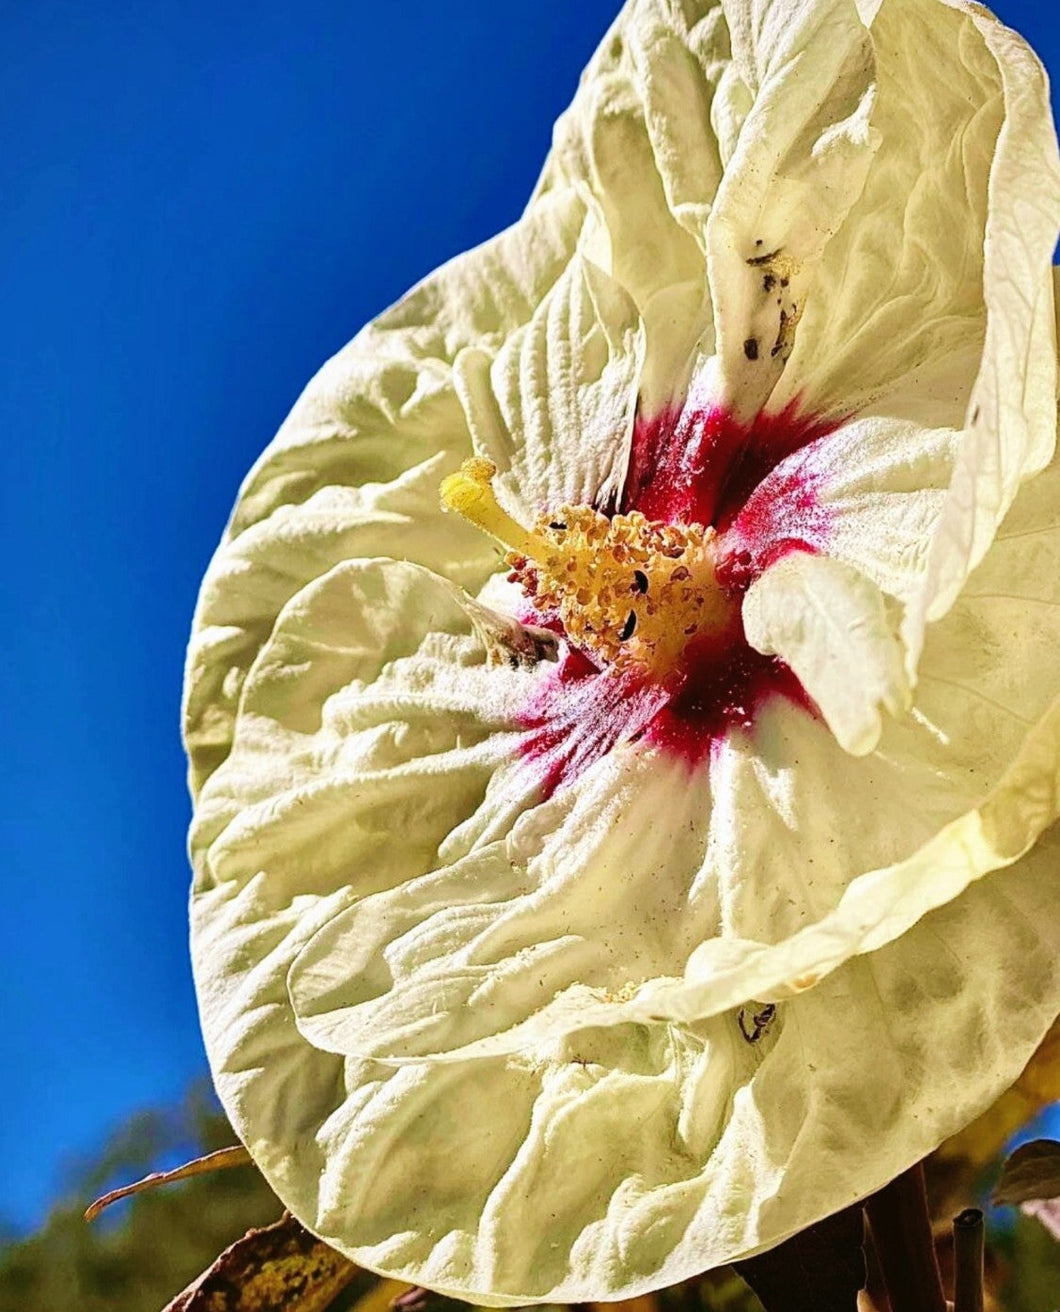 'Hibiscus' Summerific® French Vanilla (Hardy/Perennial)